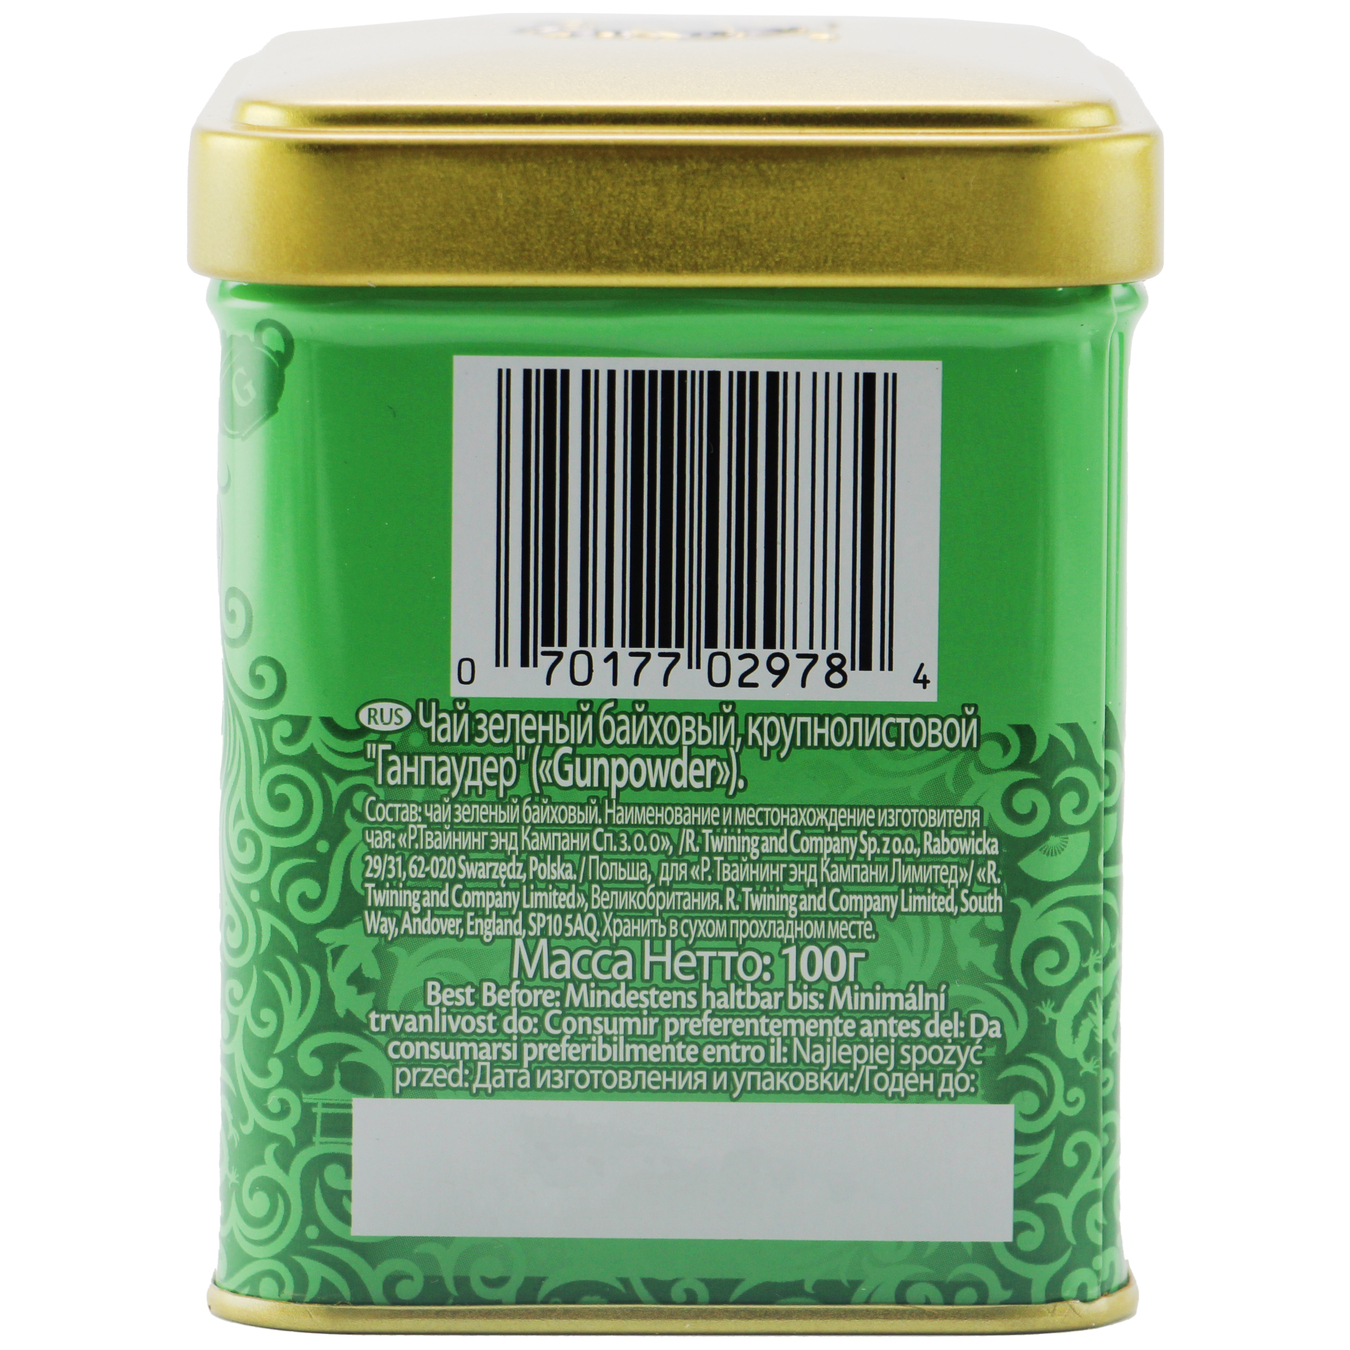 Twinings gunpowder green tea 100g 2